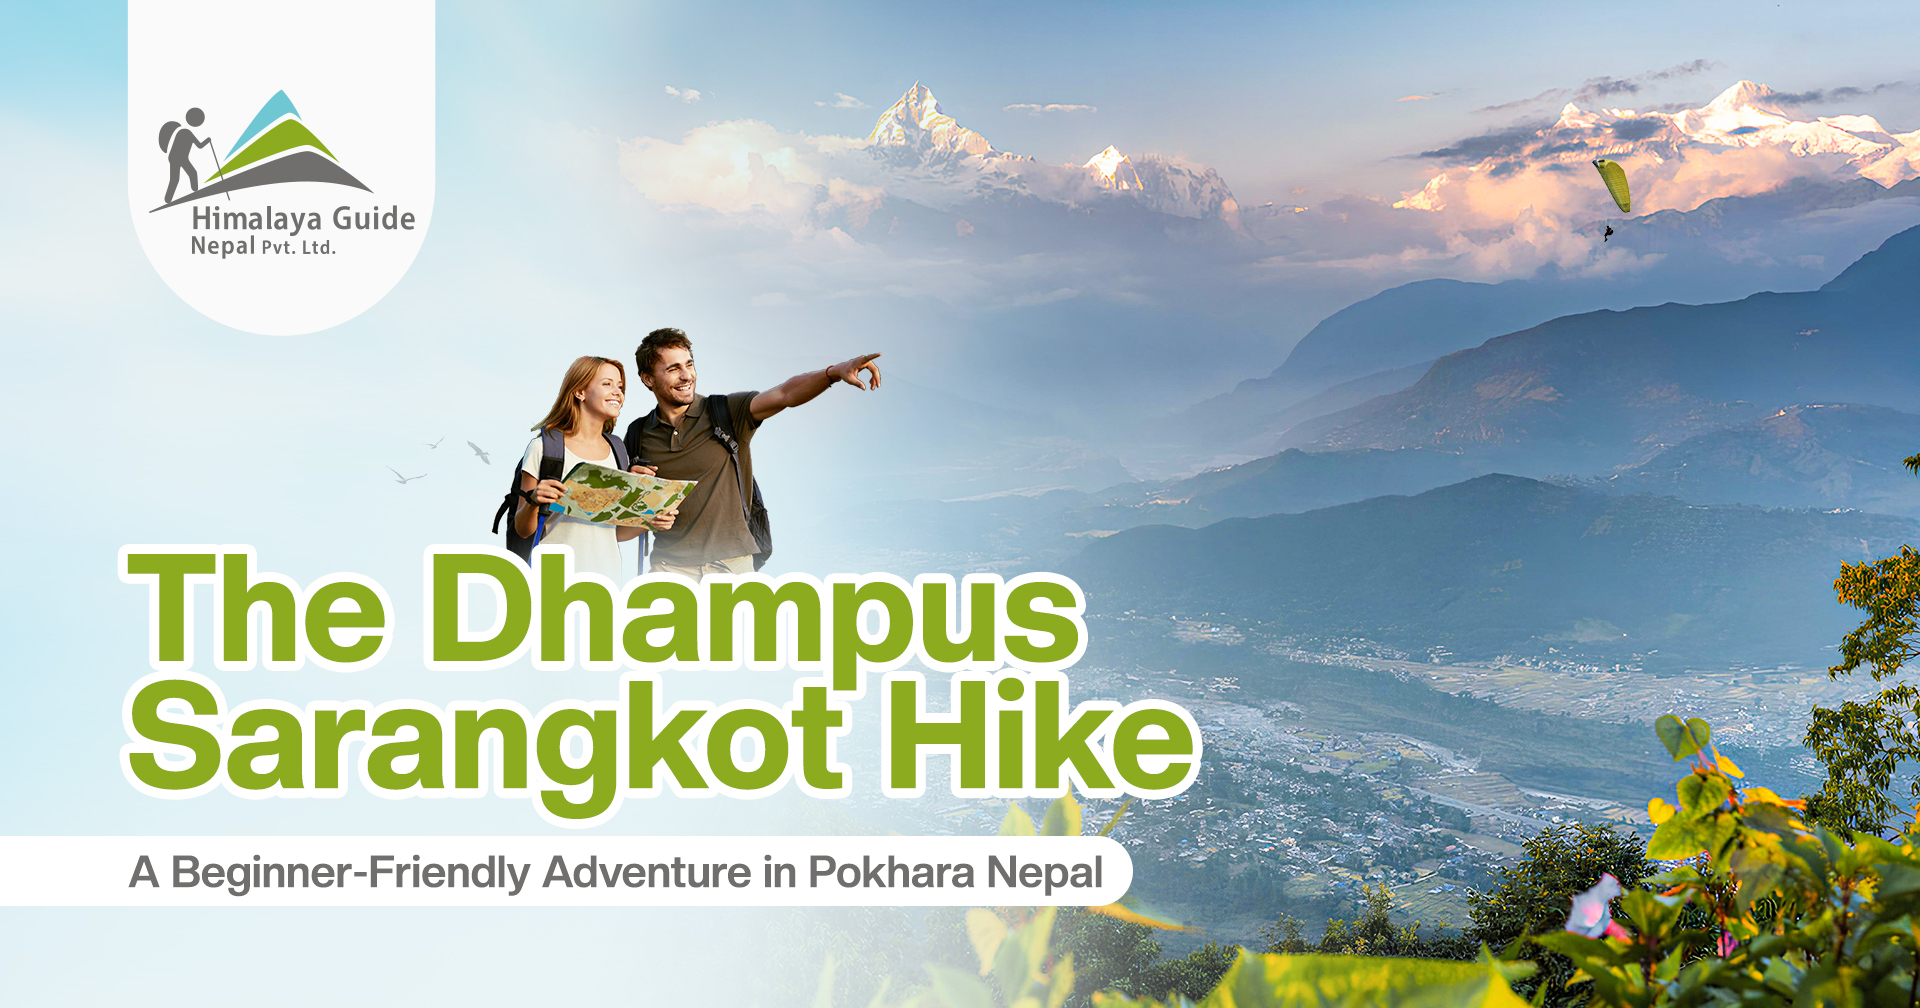 The Dhampus Sarangkot Hike: A Beginner-Friendly Adventure in Pokhara Nepal